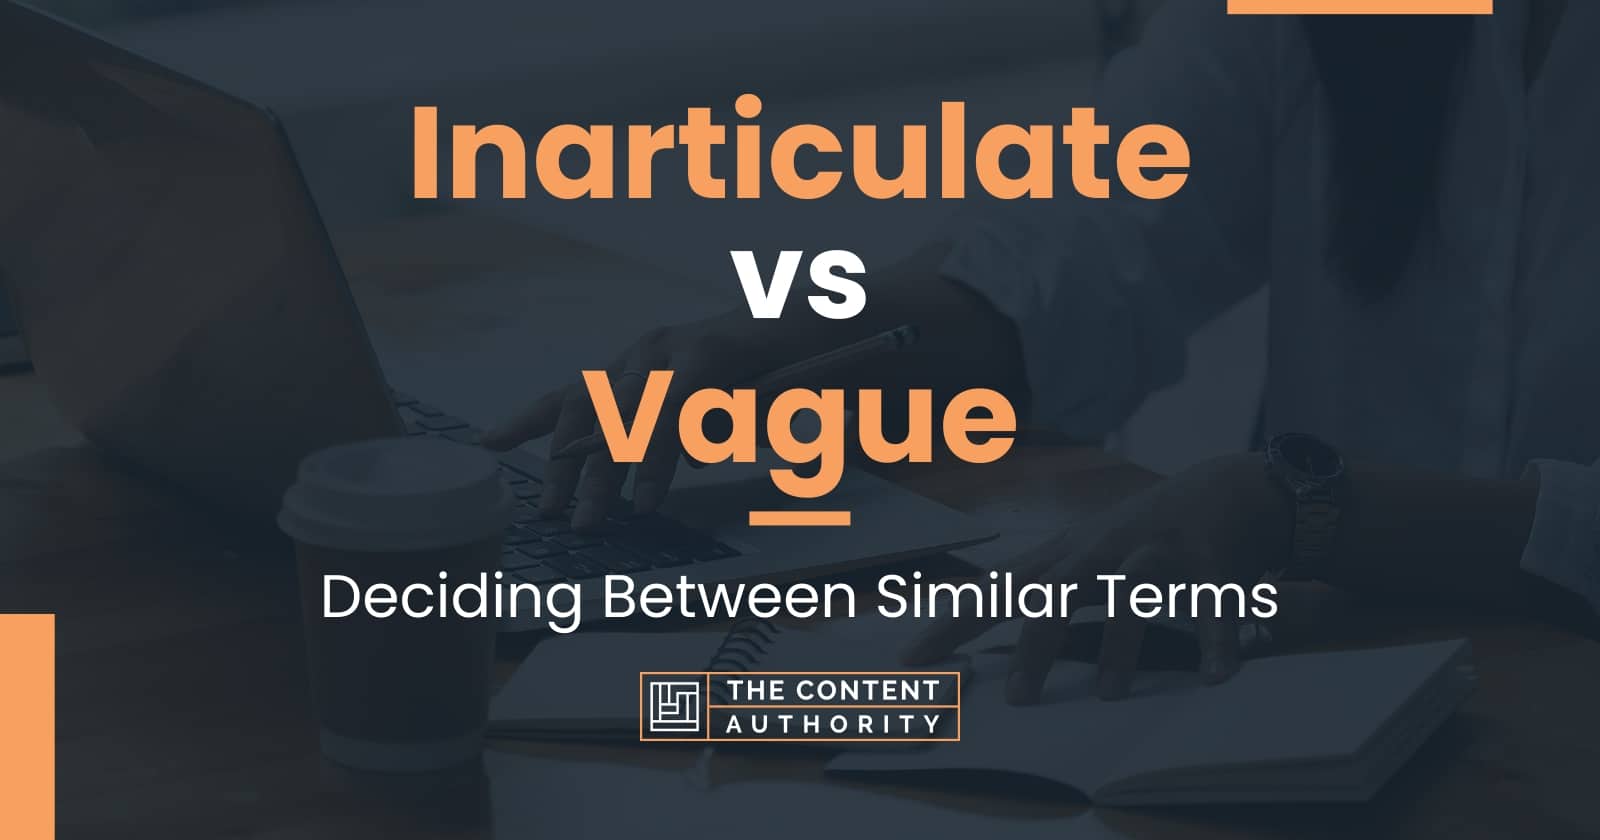 Inarticulate vs Vague: Deciding Between Similar Terms